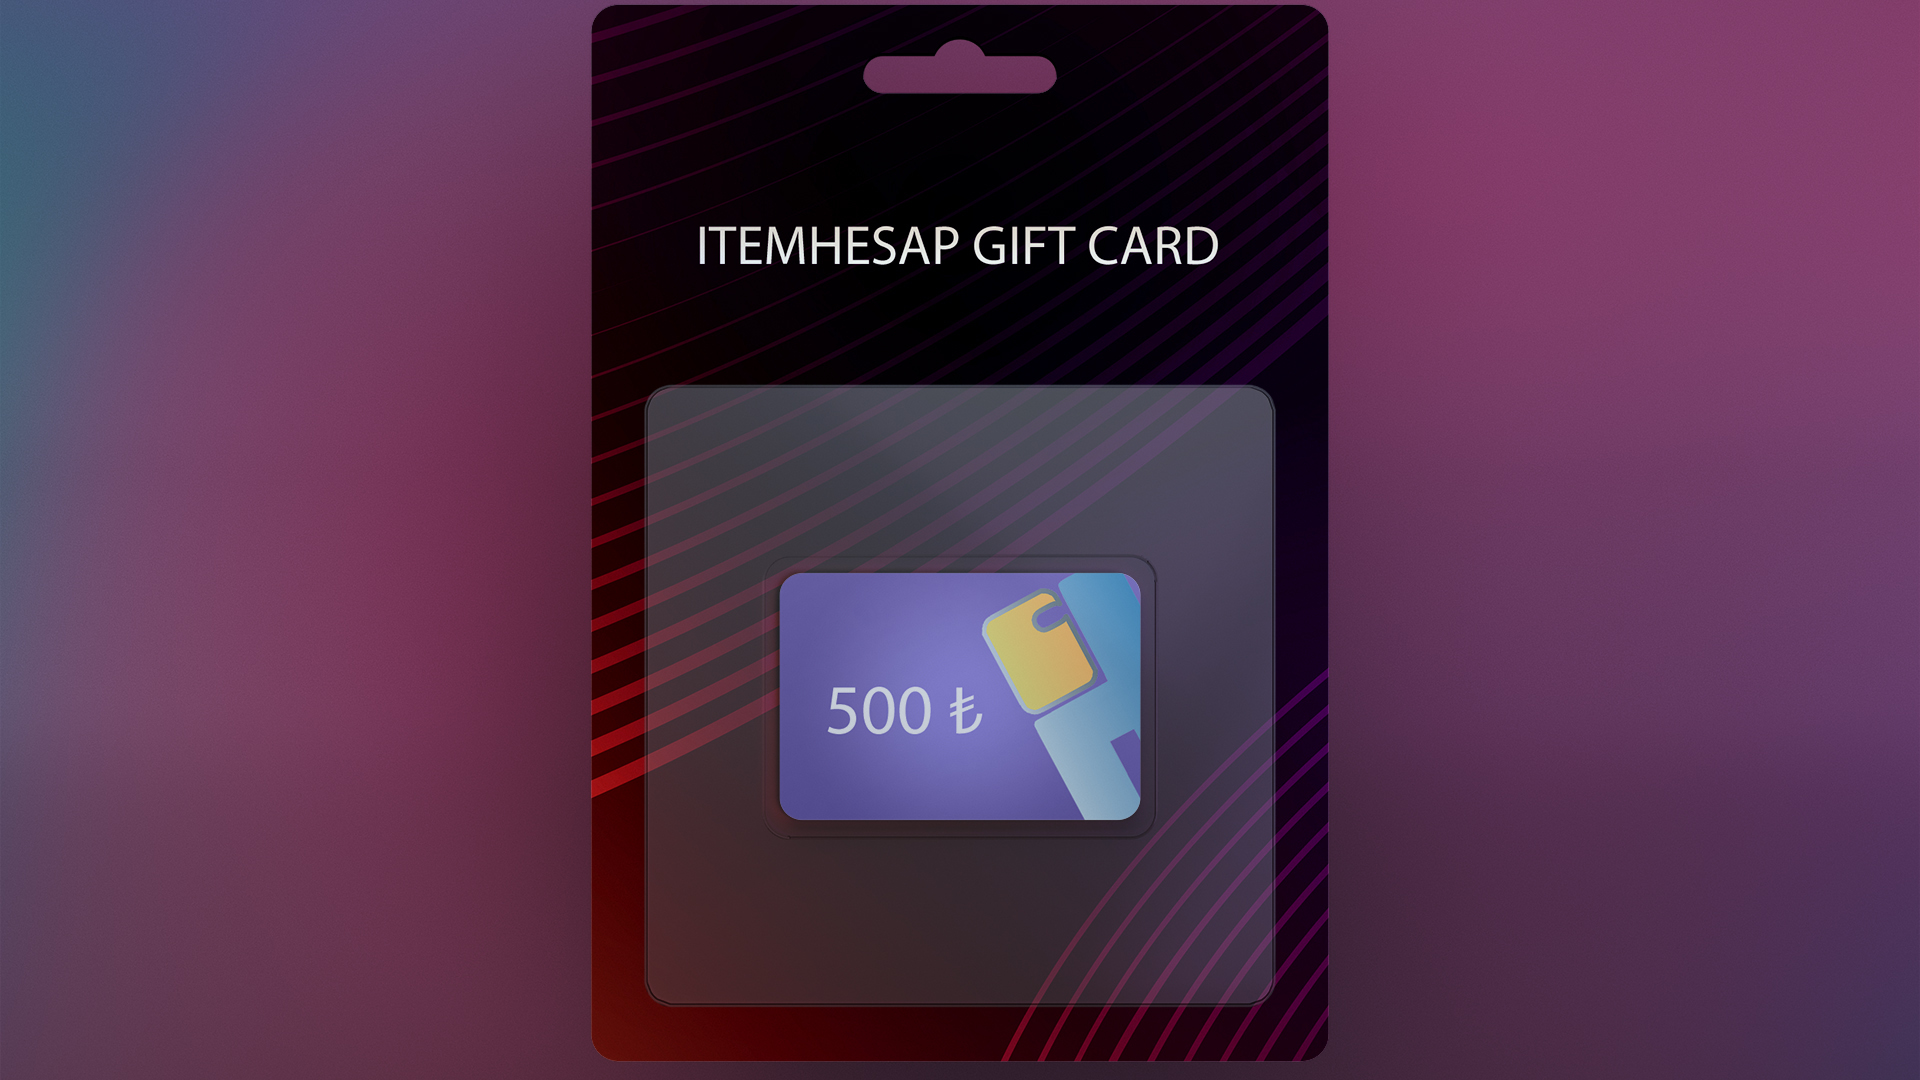 ItemHesap ₺500 Gift Card $31.04